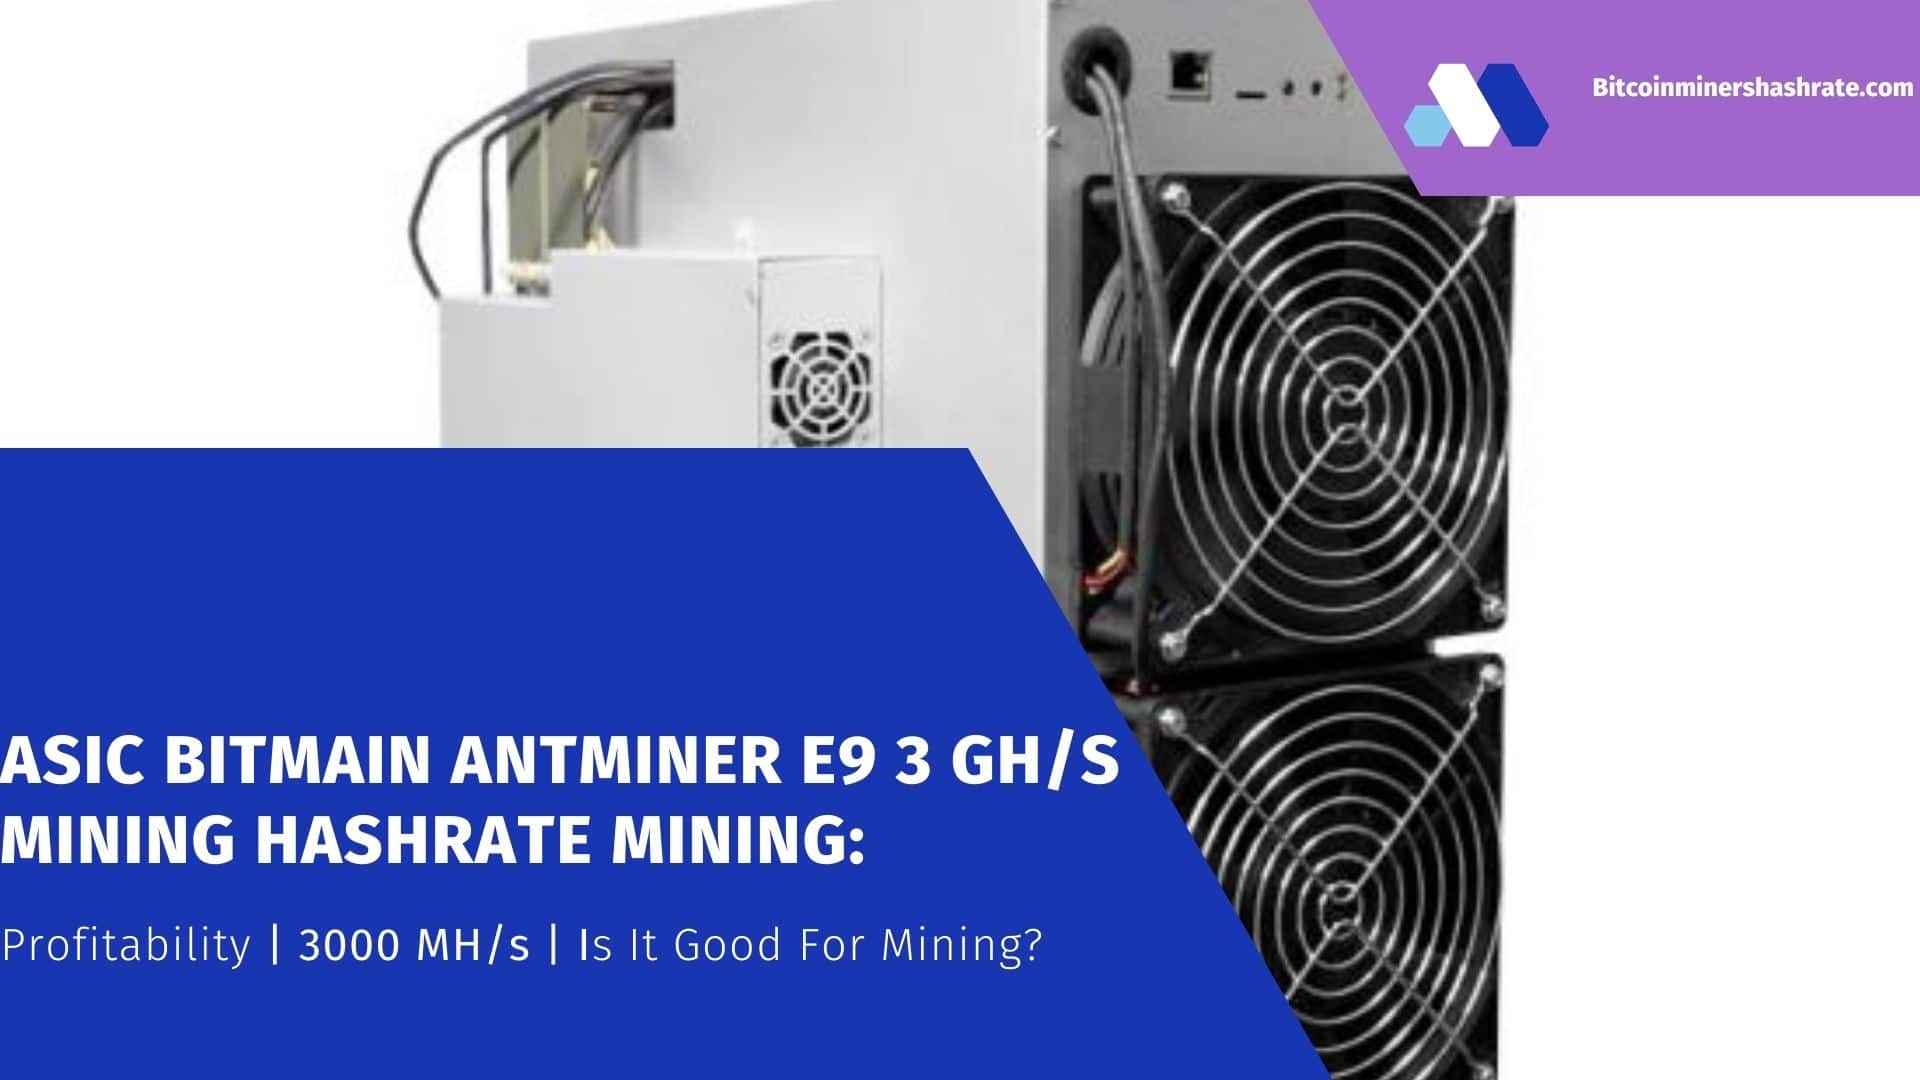 ASIC Bitmain Antminer E9 3 GHs Mining Hashrate